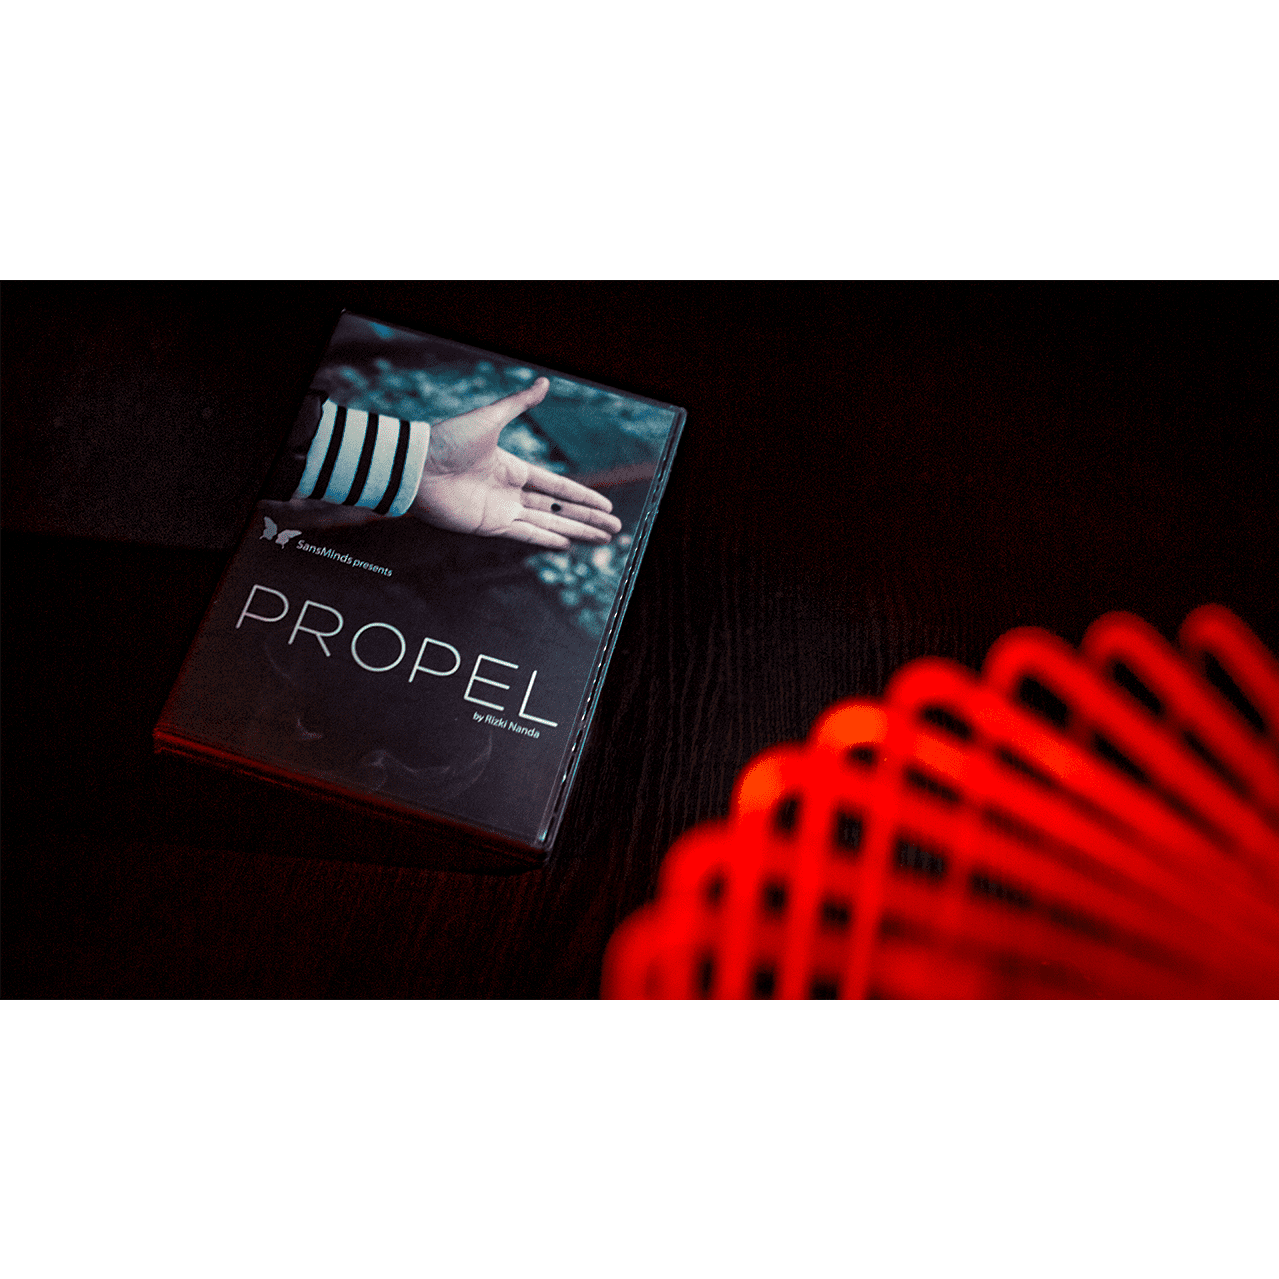 Propel (DVD and Gimmick) by Rizki Nanda and SansMinds - DVD